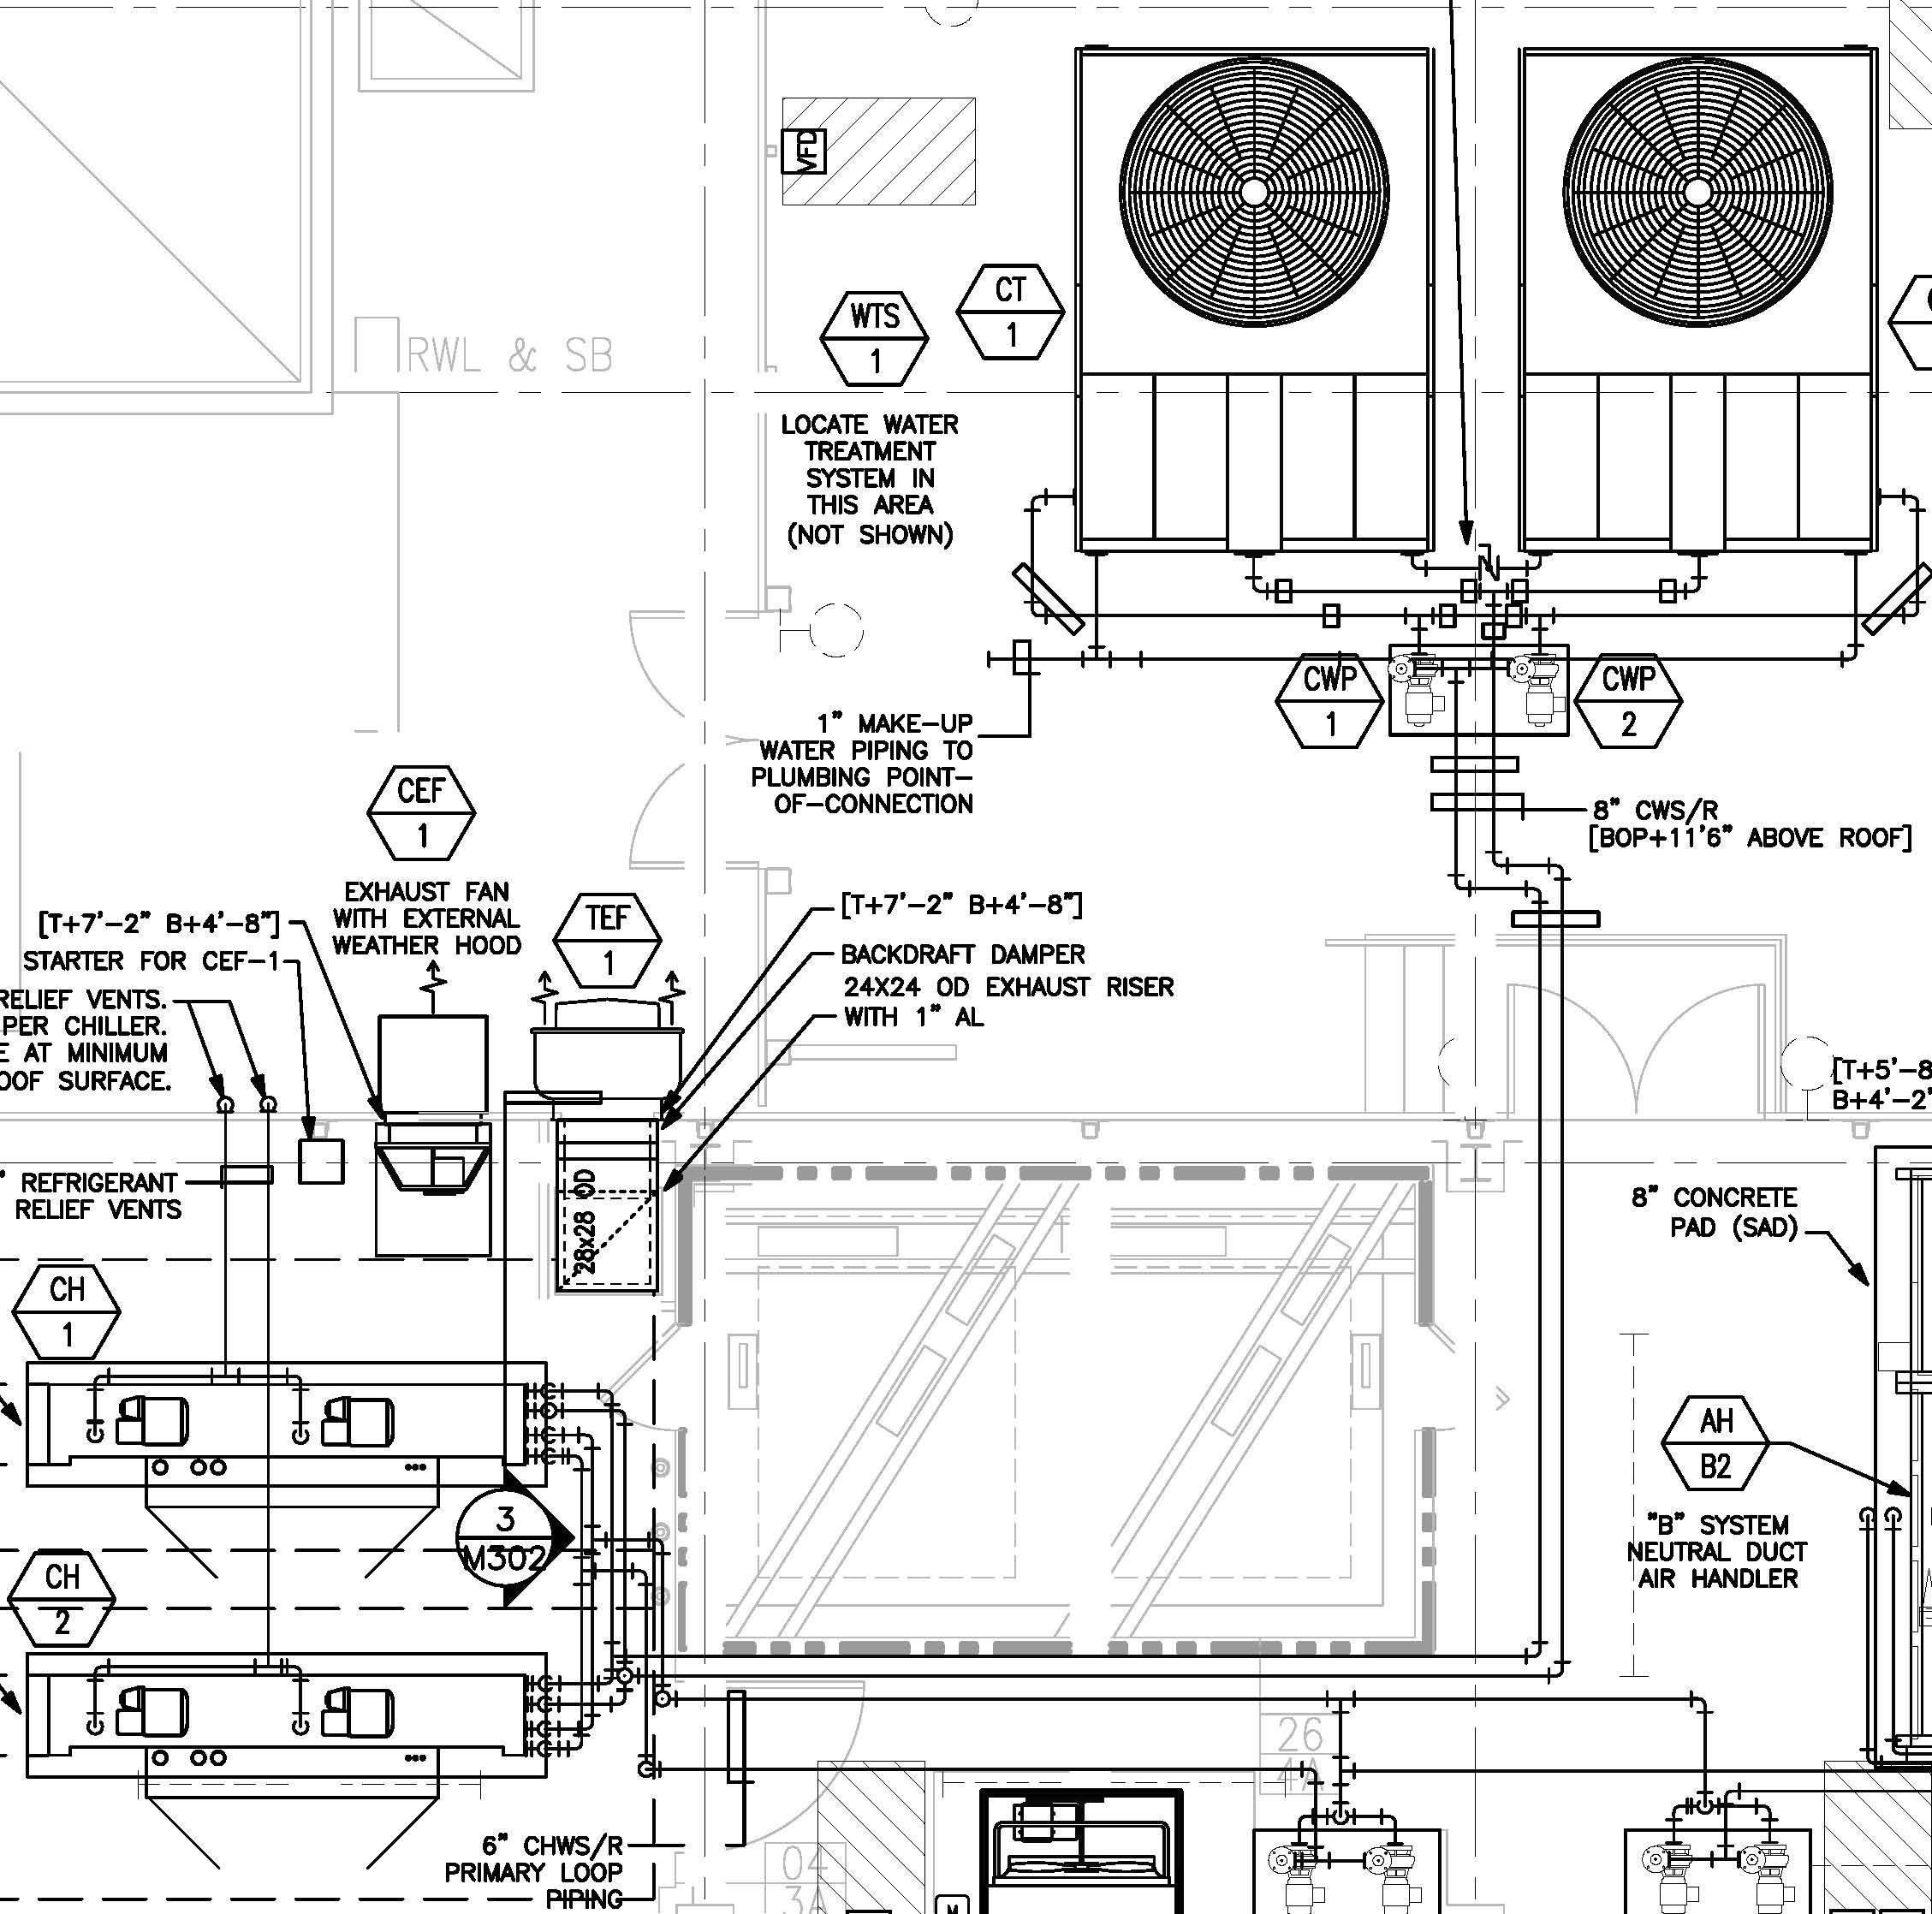 Ford Escort Zx2 Engine Diagram Automotive Wiring Diagram Archives Simple Wiring Diagram Of Ford Escort Zx2 Engine Diagram